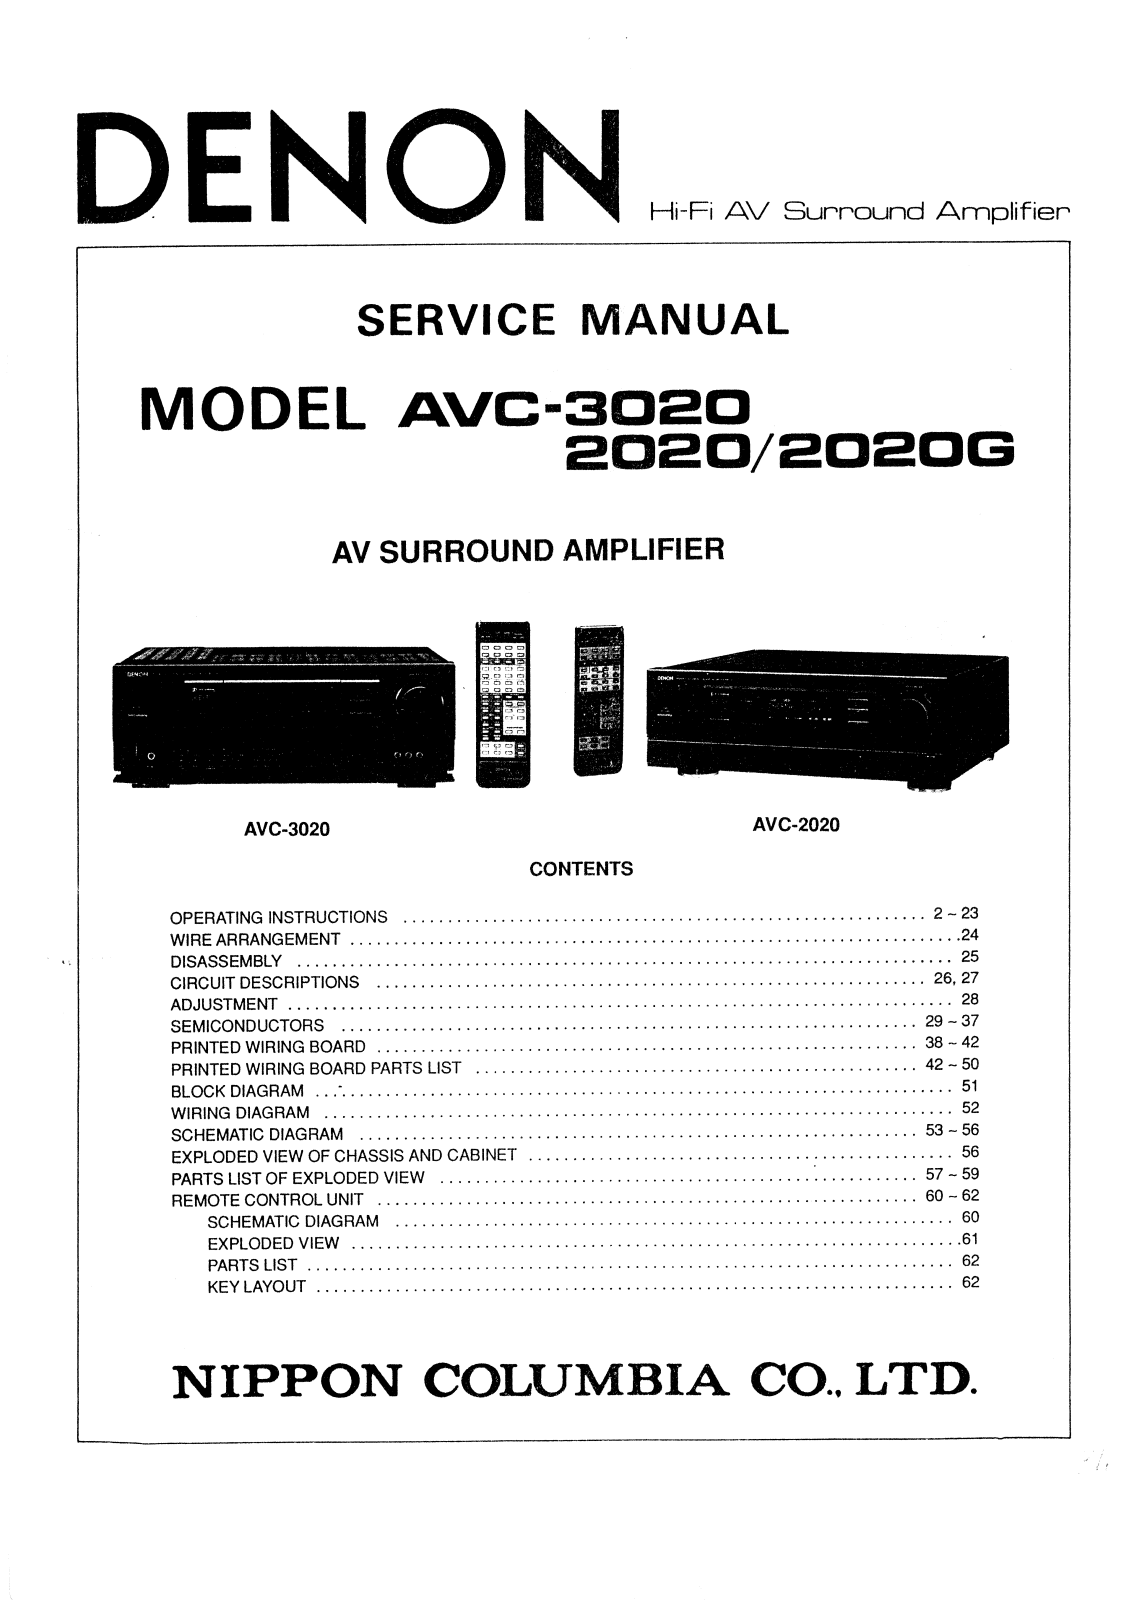 Denon AVC-2020, AVC-2020G Service Manual